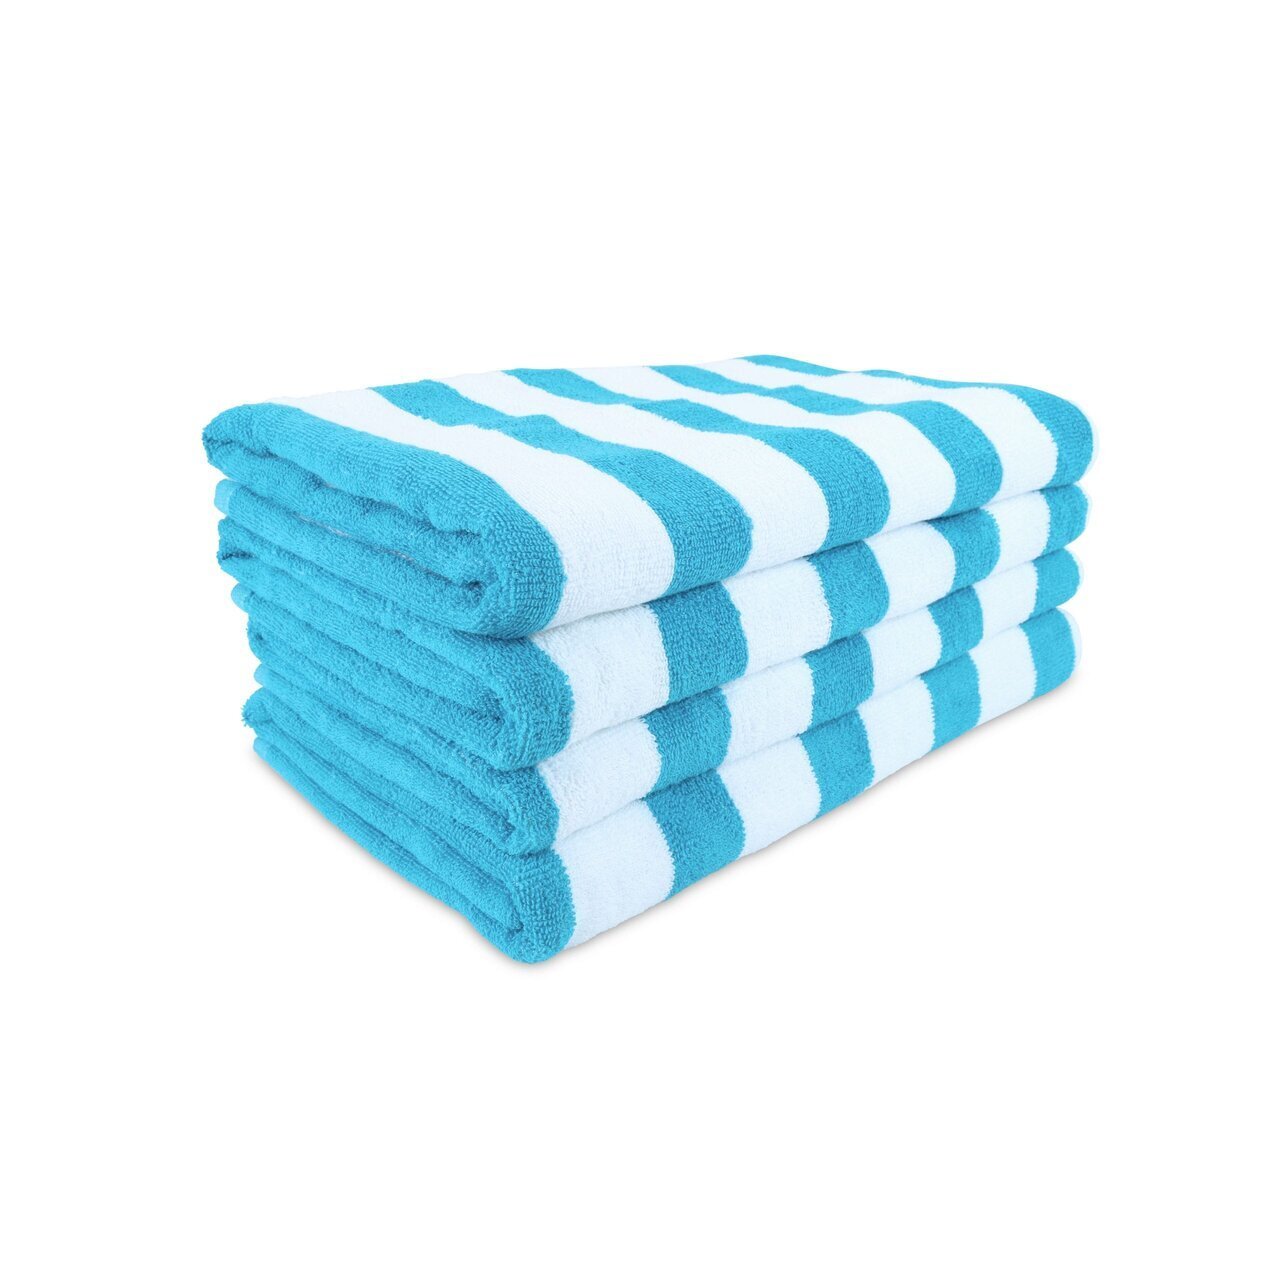 . Case of [12] Cali Cabana Stripe Beach Towel - Blue/White .